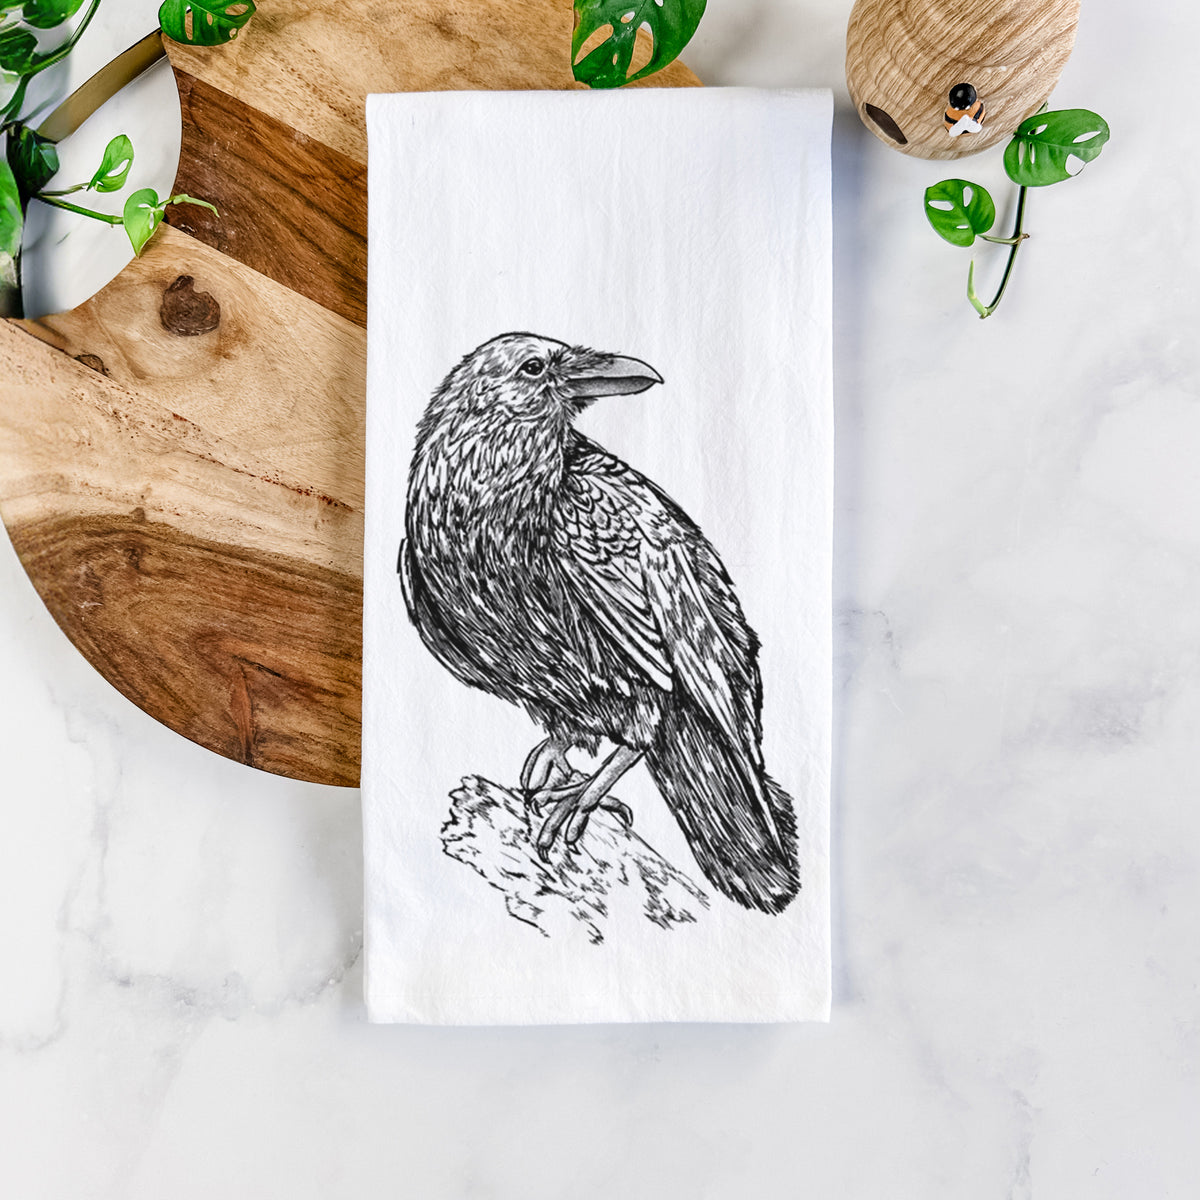 Corvus corax - Common Raven Tea Towel